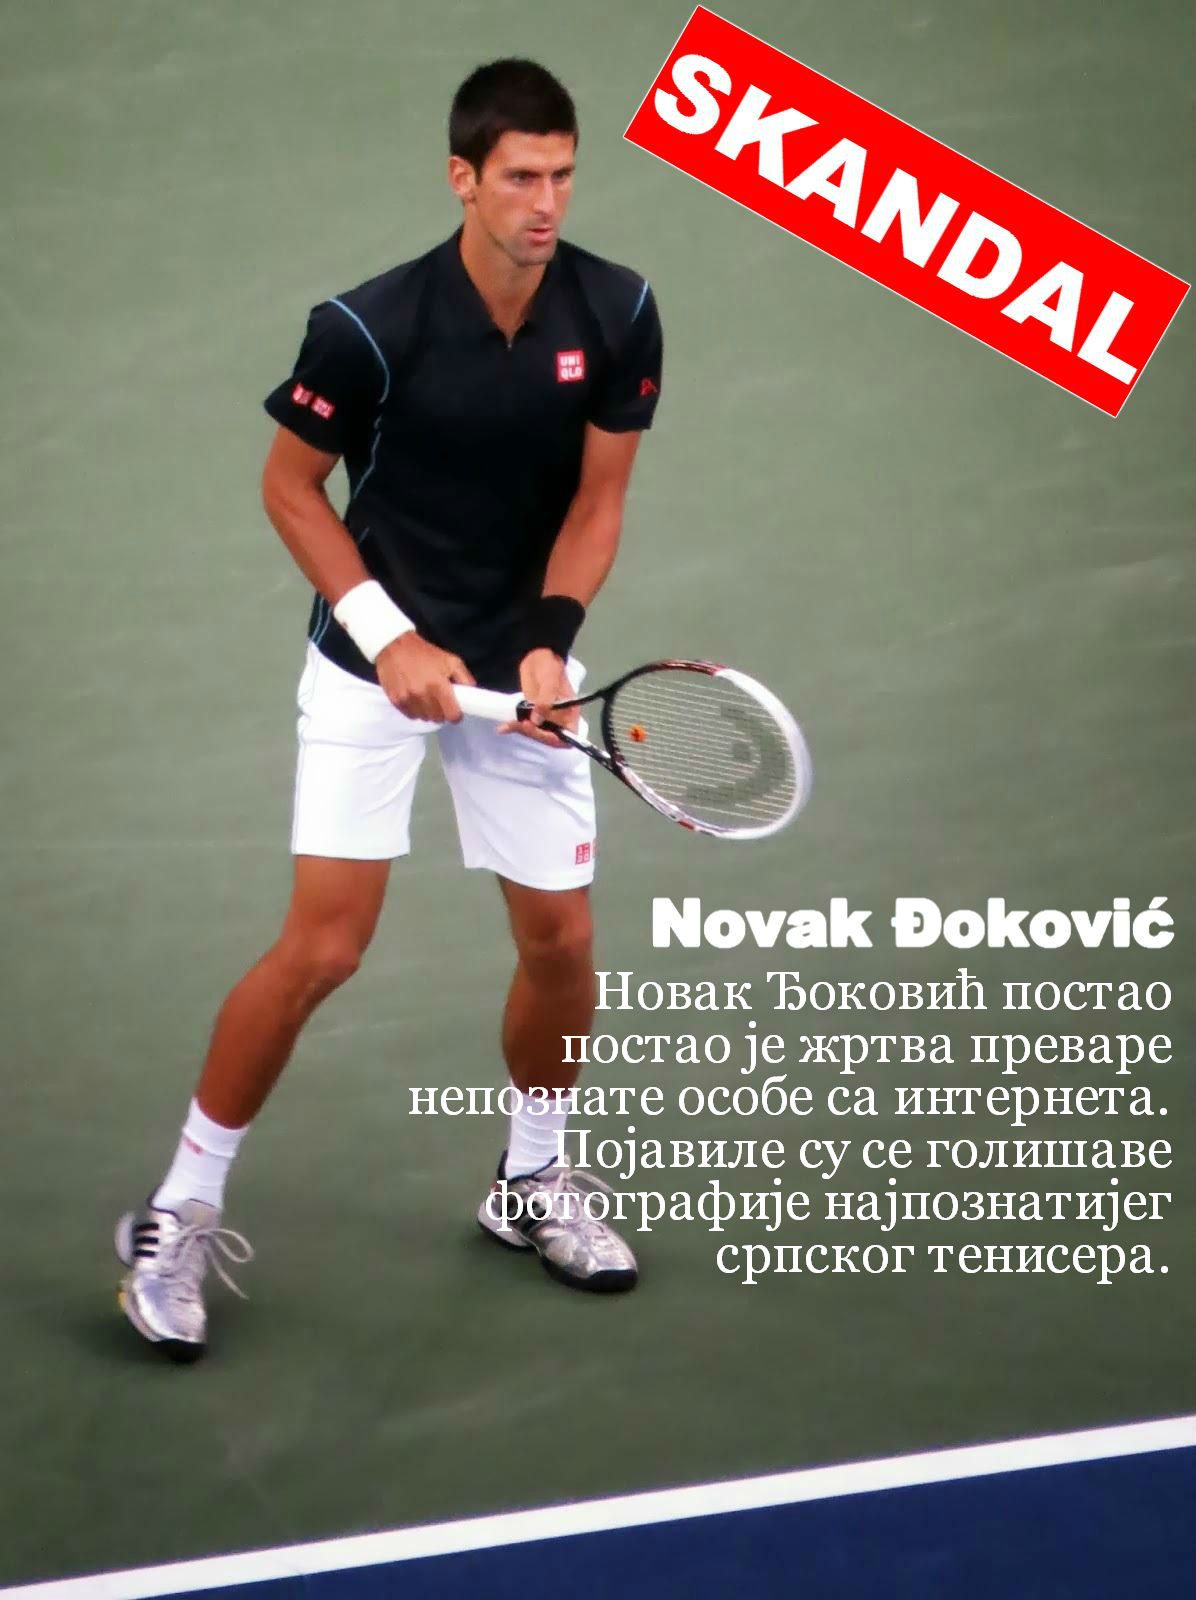 Click here to see Novak Djokovic naked.